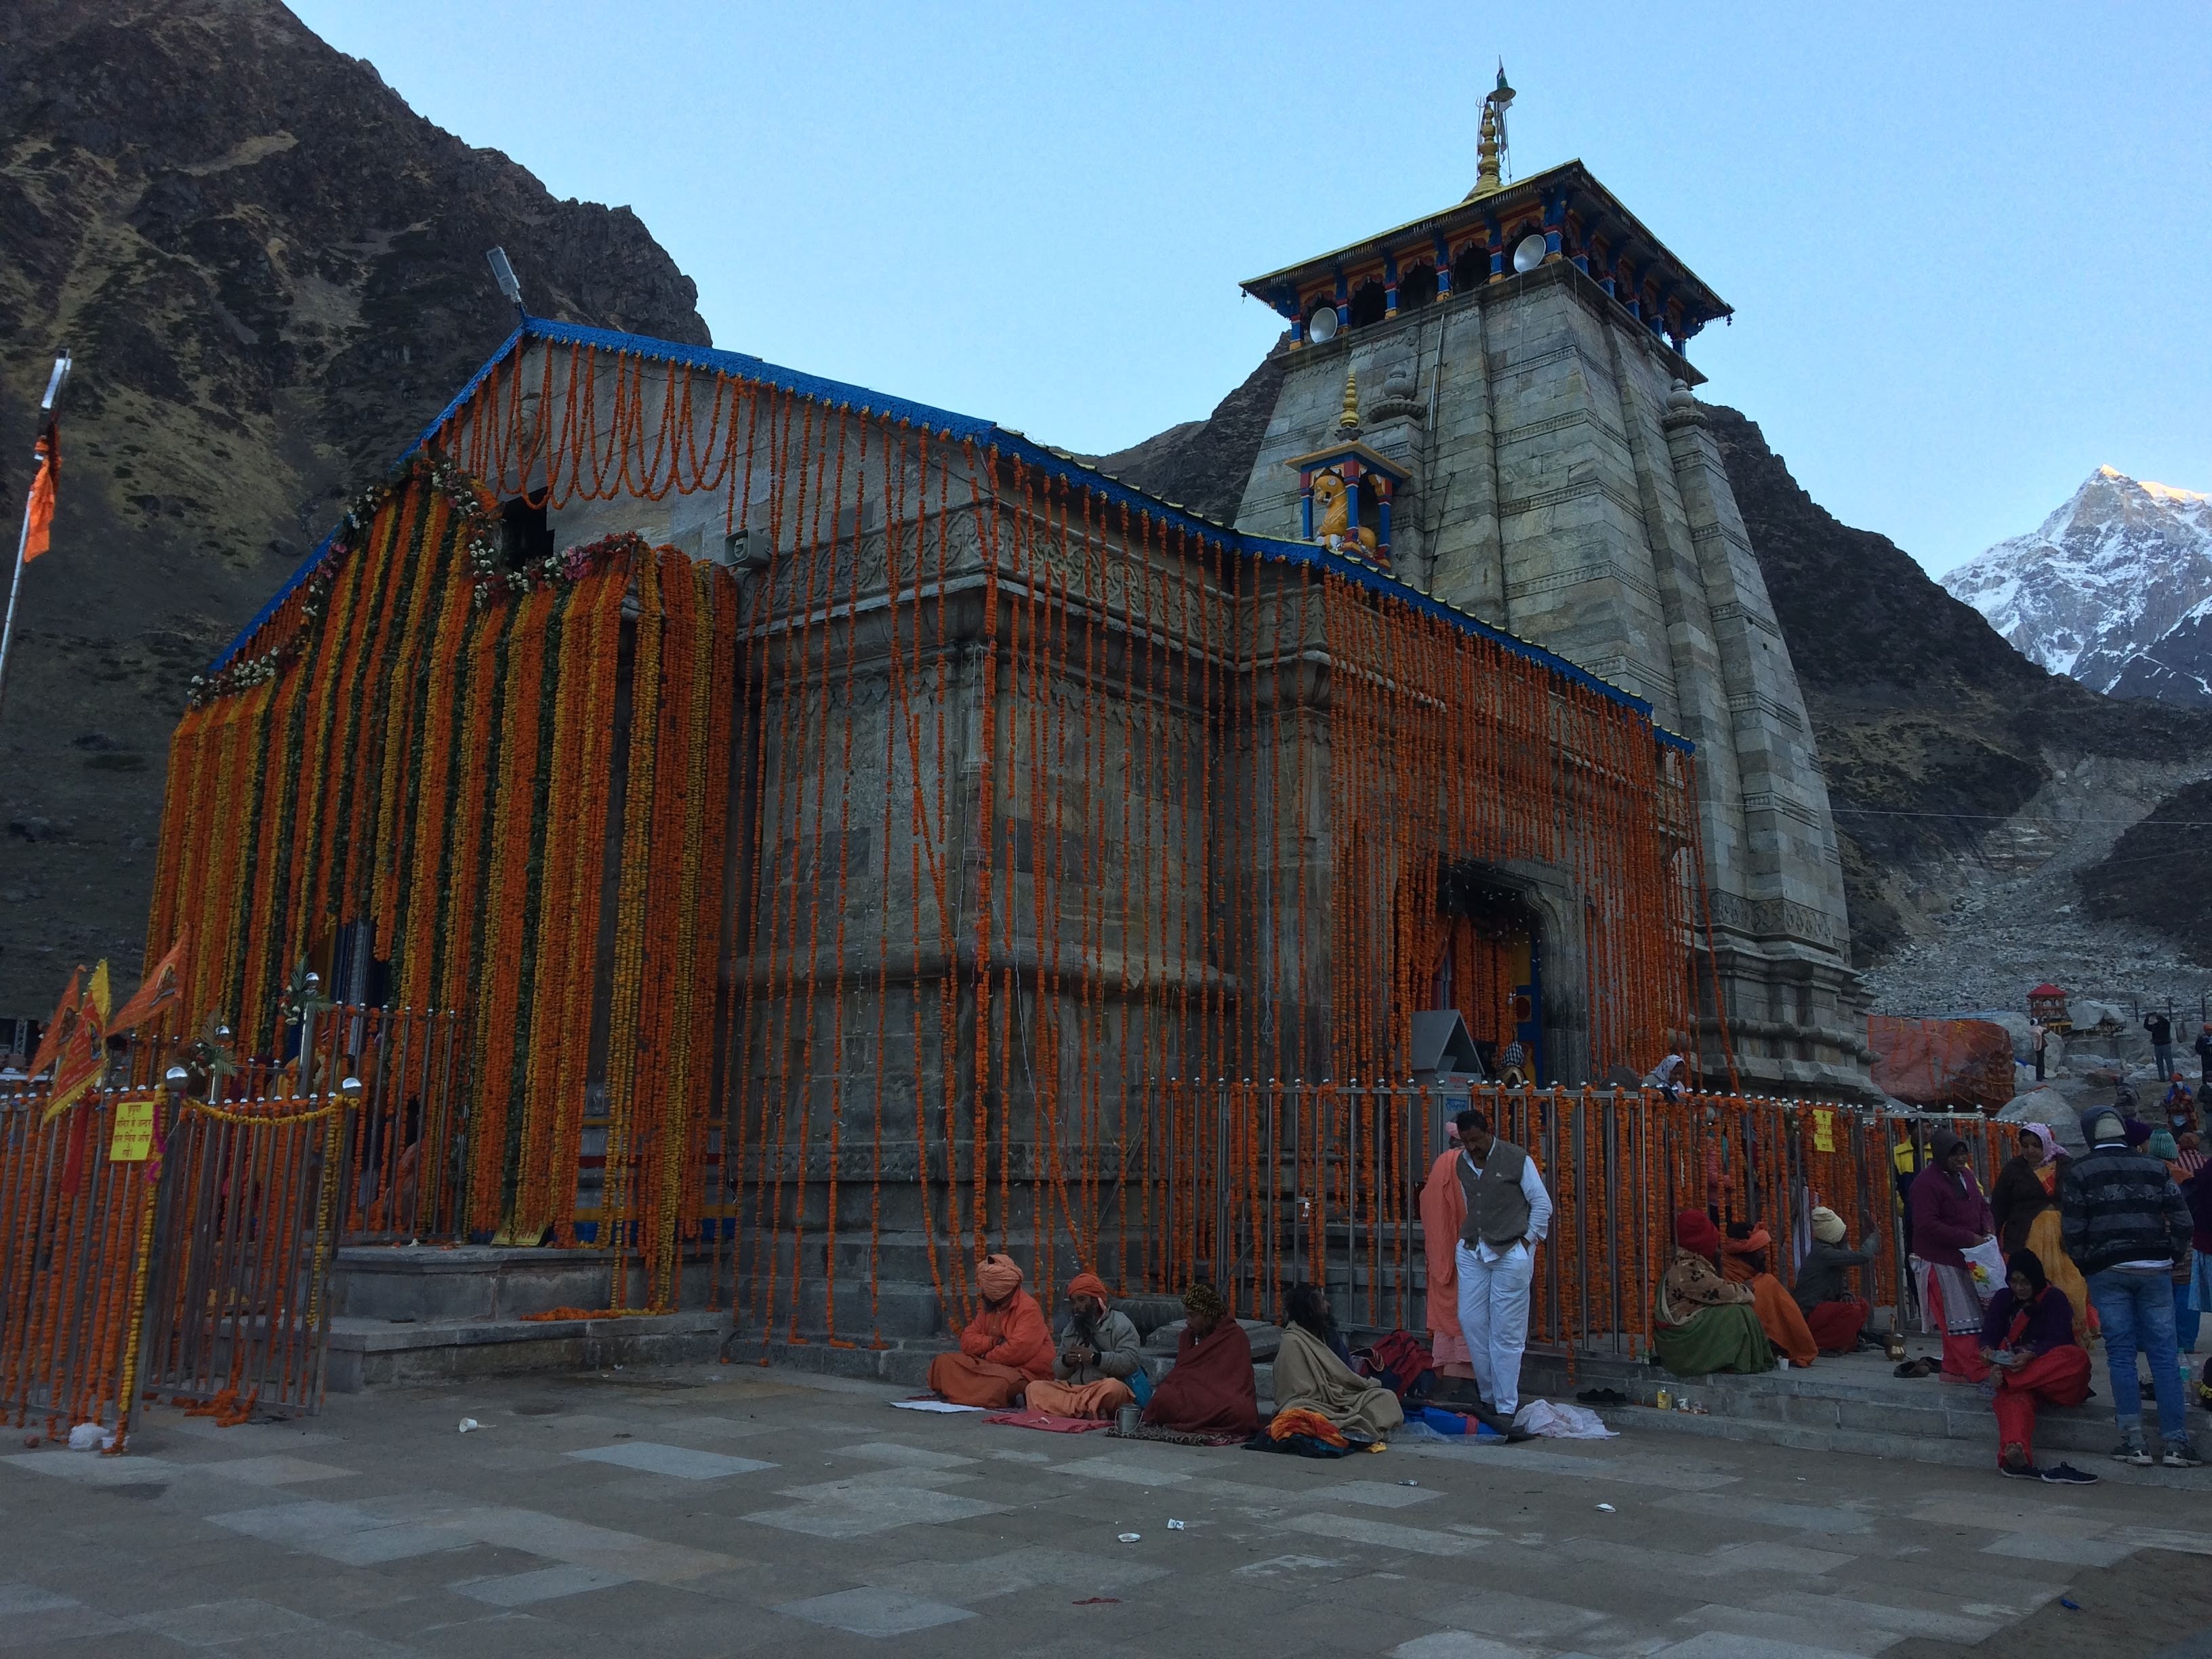 Free of kedarnath temple, lord shiva